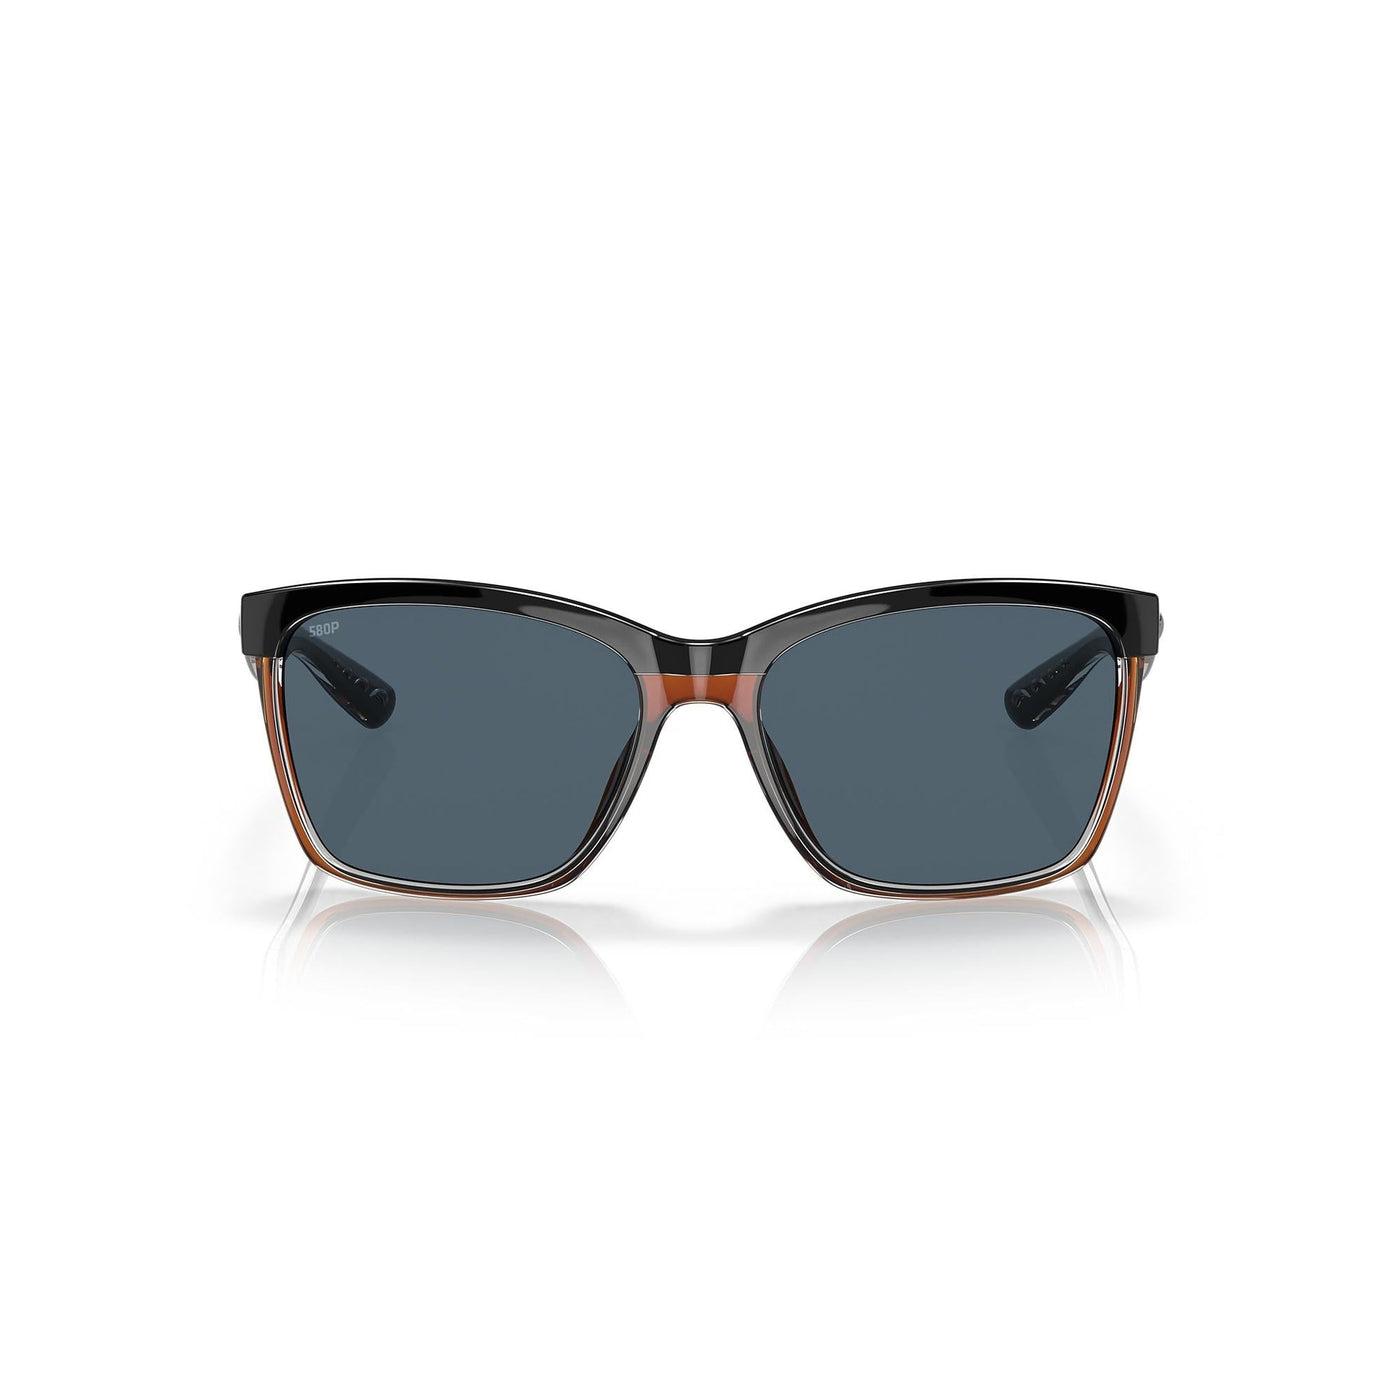 Costa Anaa-Sunglasses-Topline Eyewear